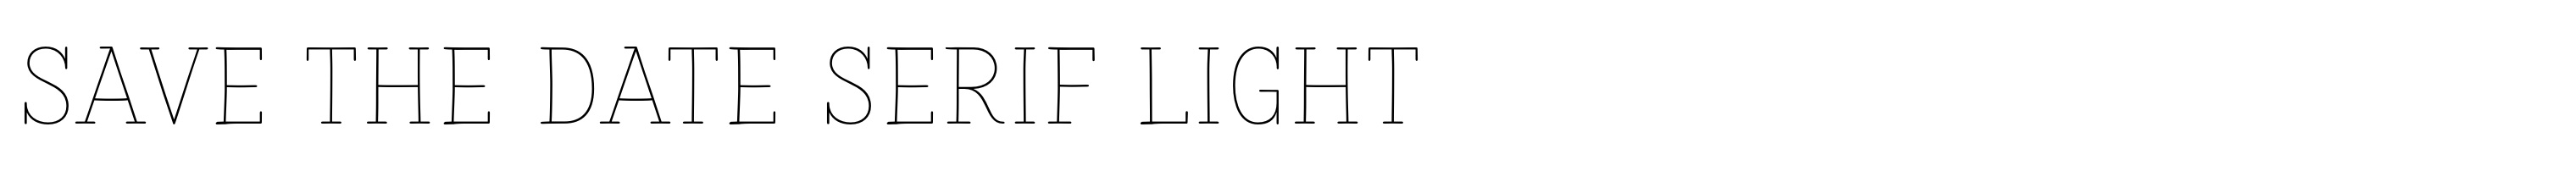 Save The Date Serif Light